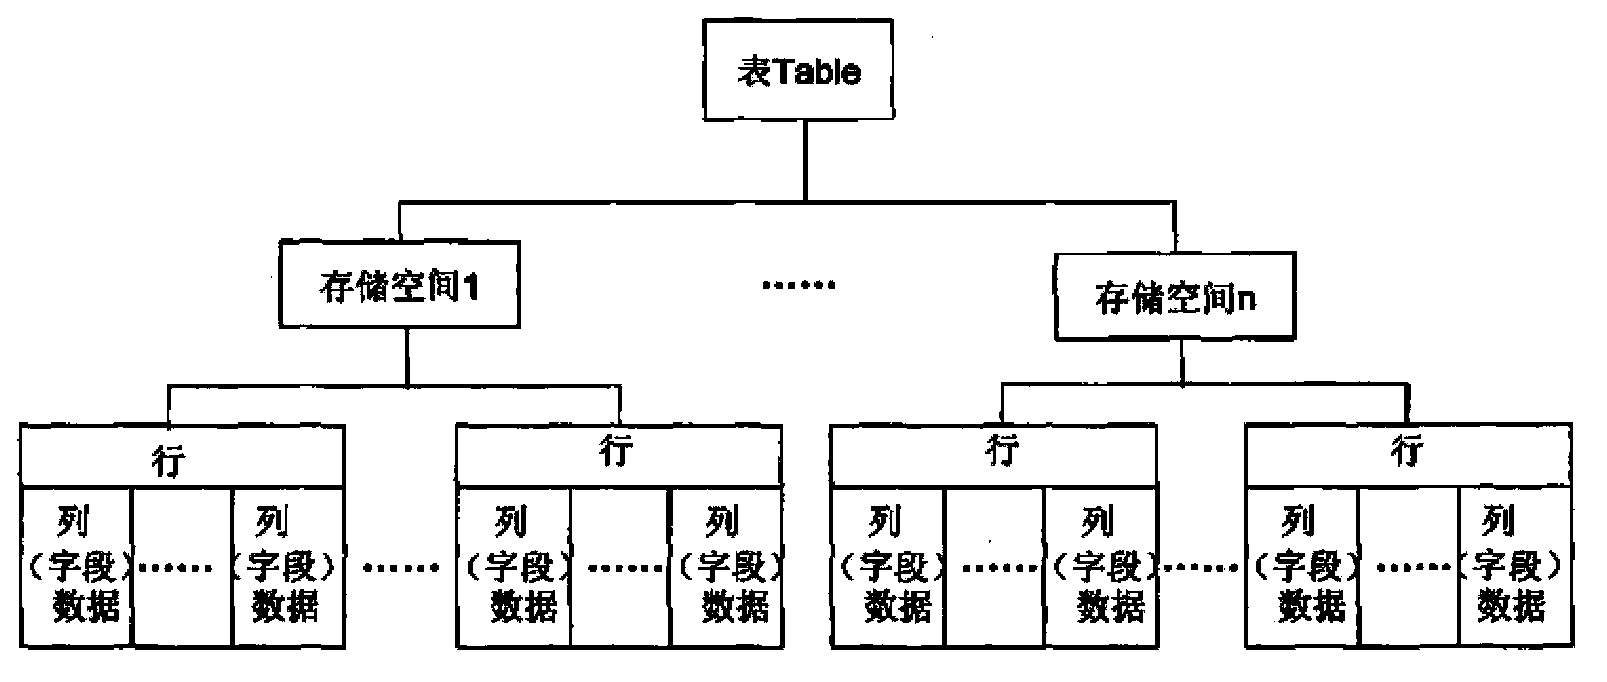 Line and column hybrid storage method of database system